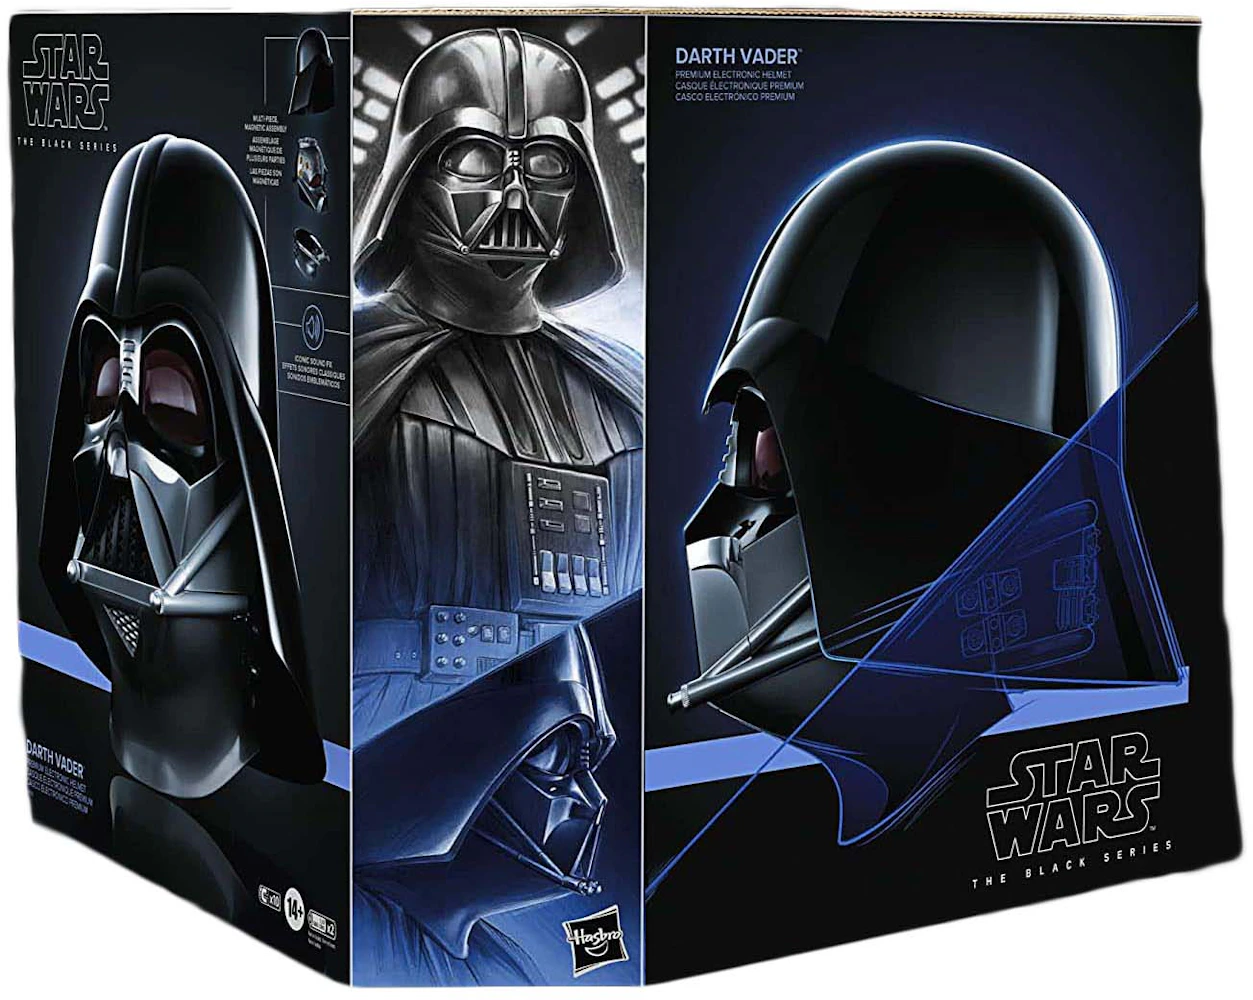 Star Wars Black Series casque électronique Dark Vador - Star Wars